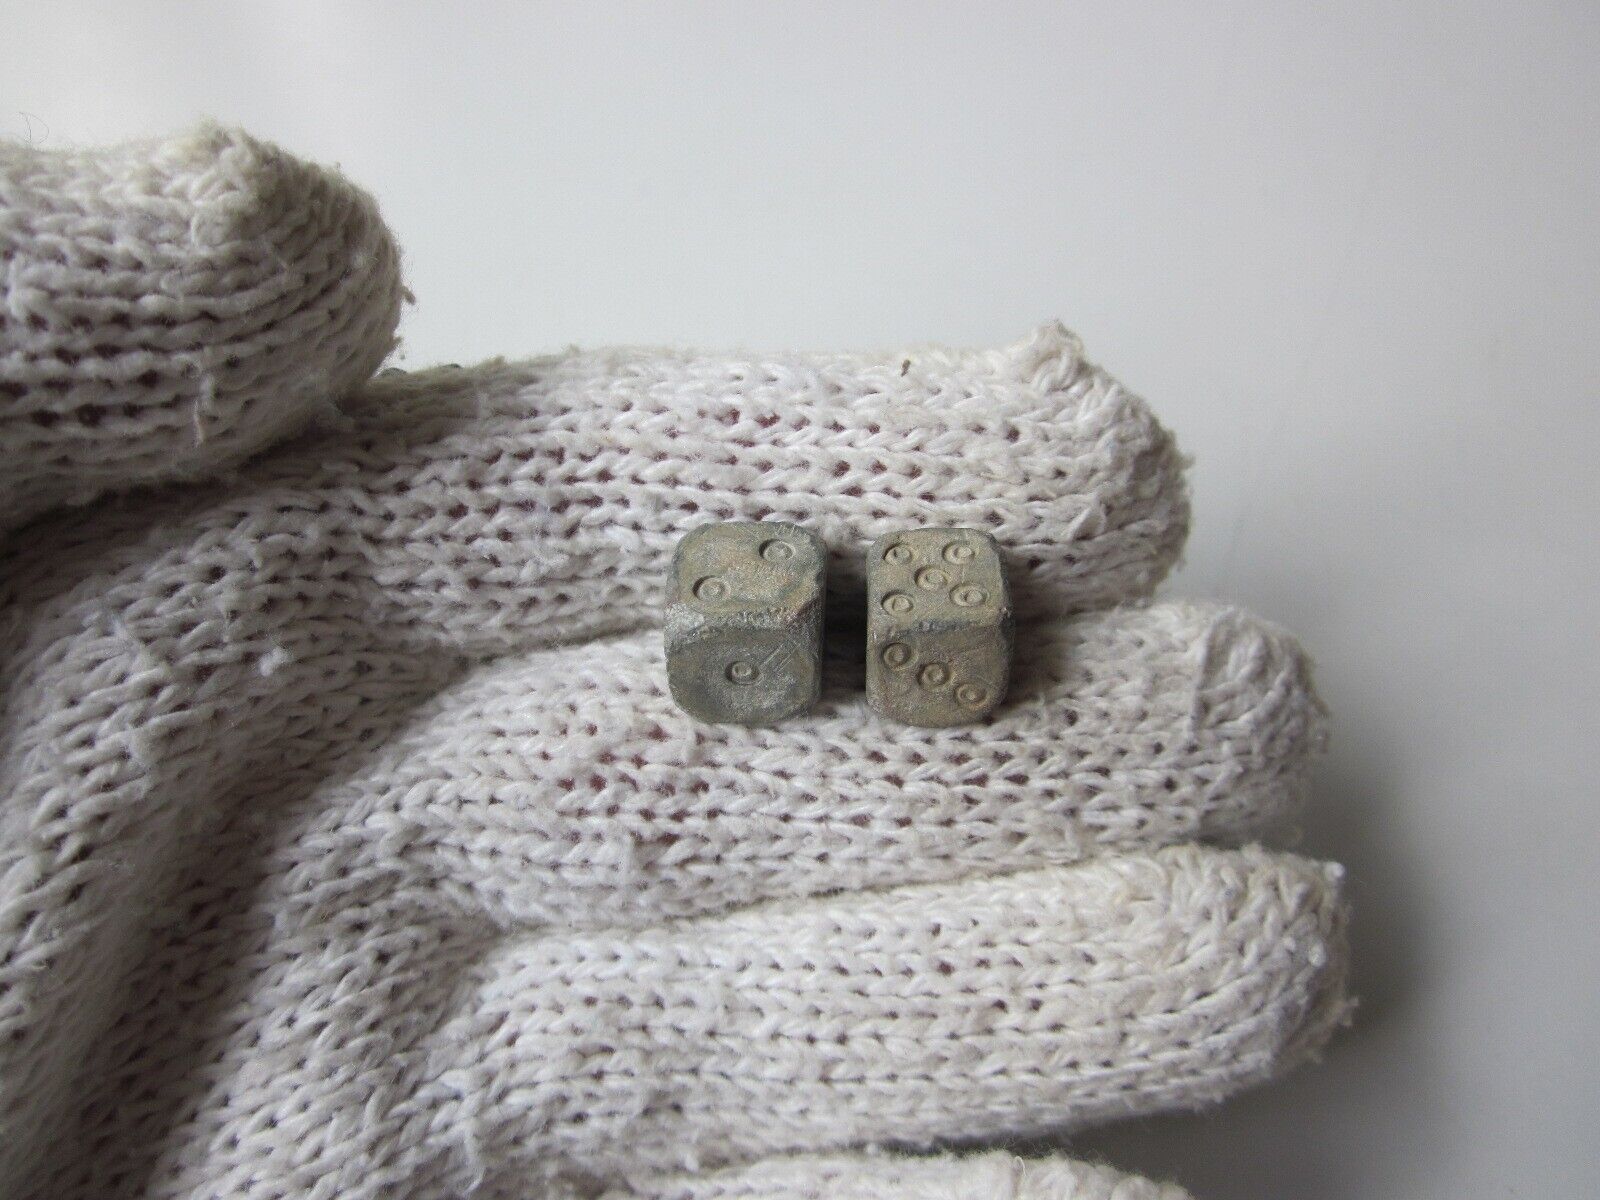 RARE ancient Roman legionnaire gambling pieces lead engraved dice I - II AD. /2